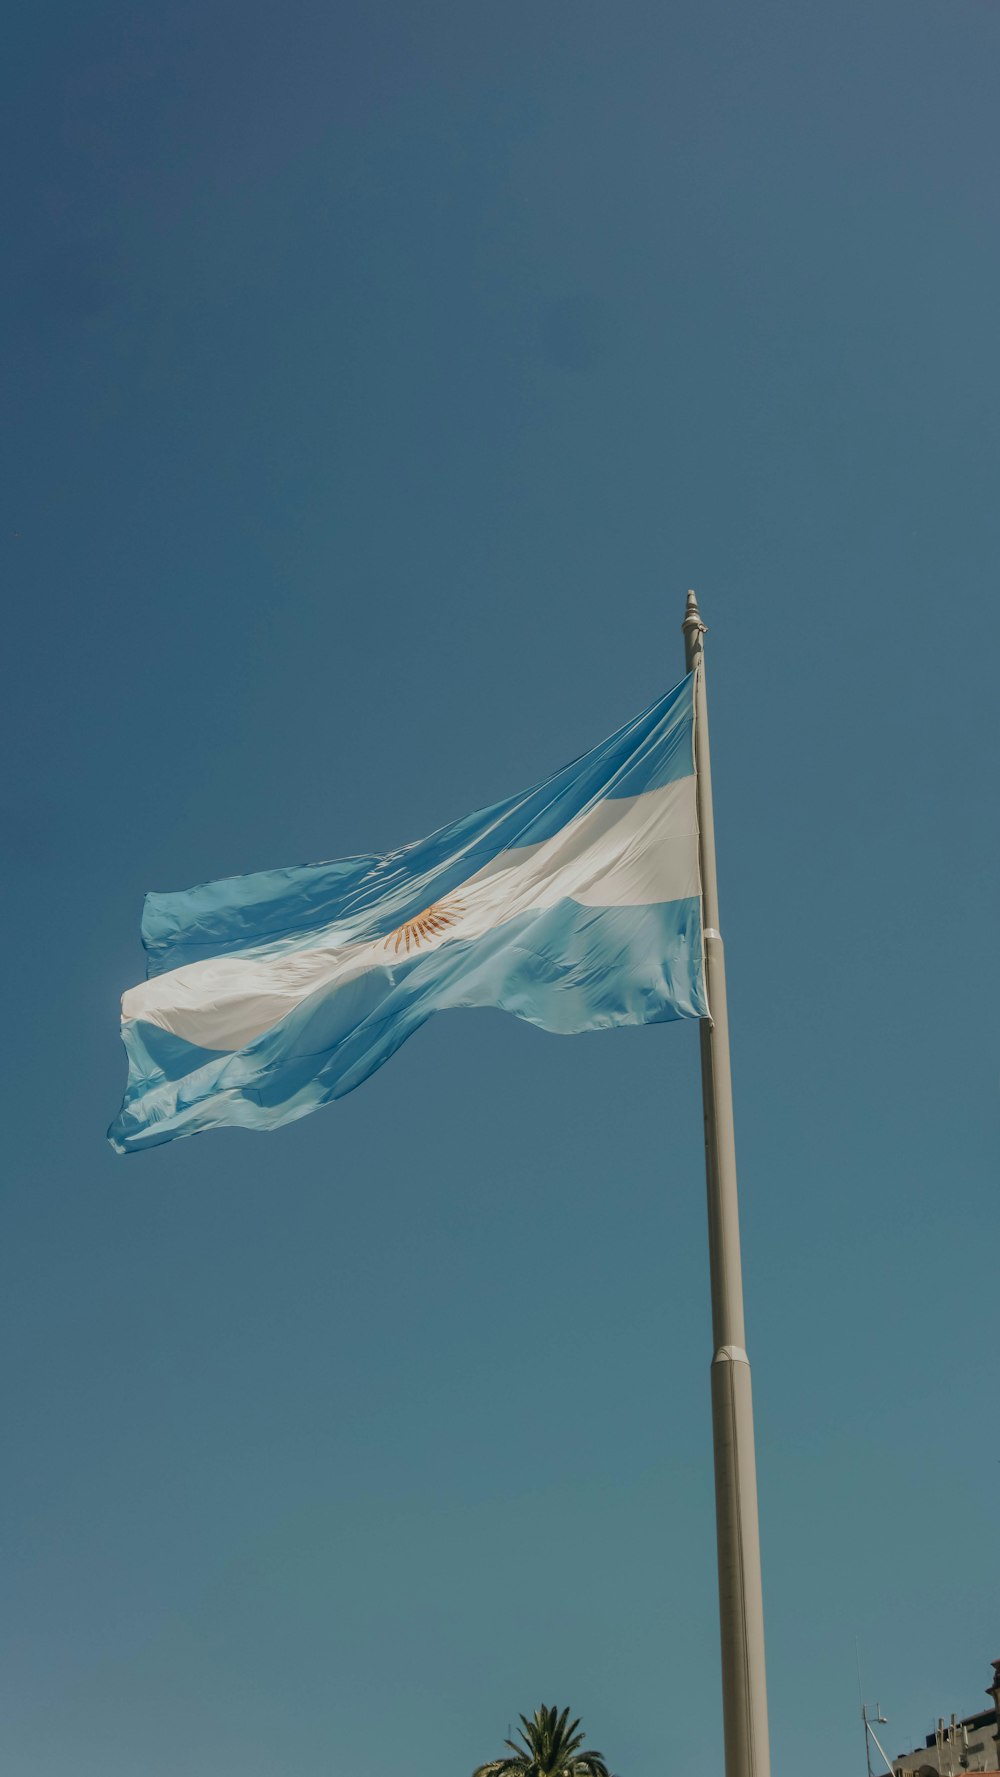 blue and white flag under blue sky during daytime